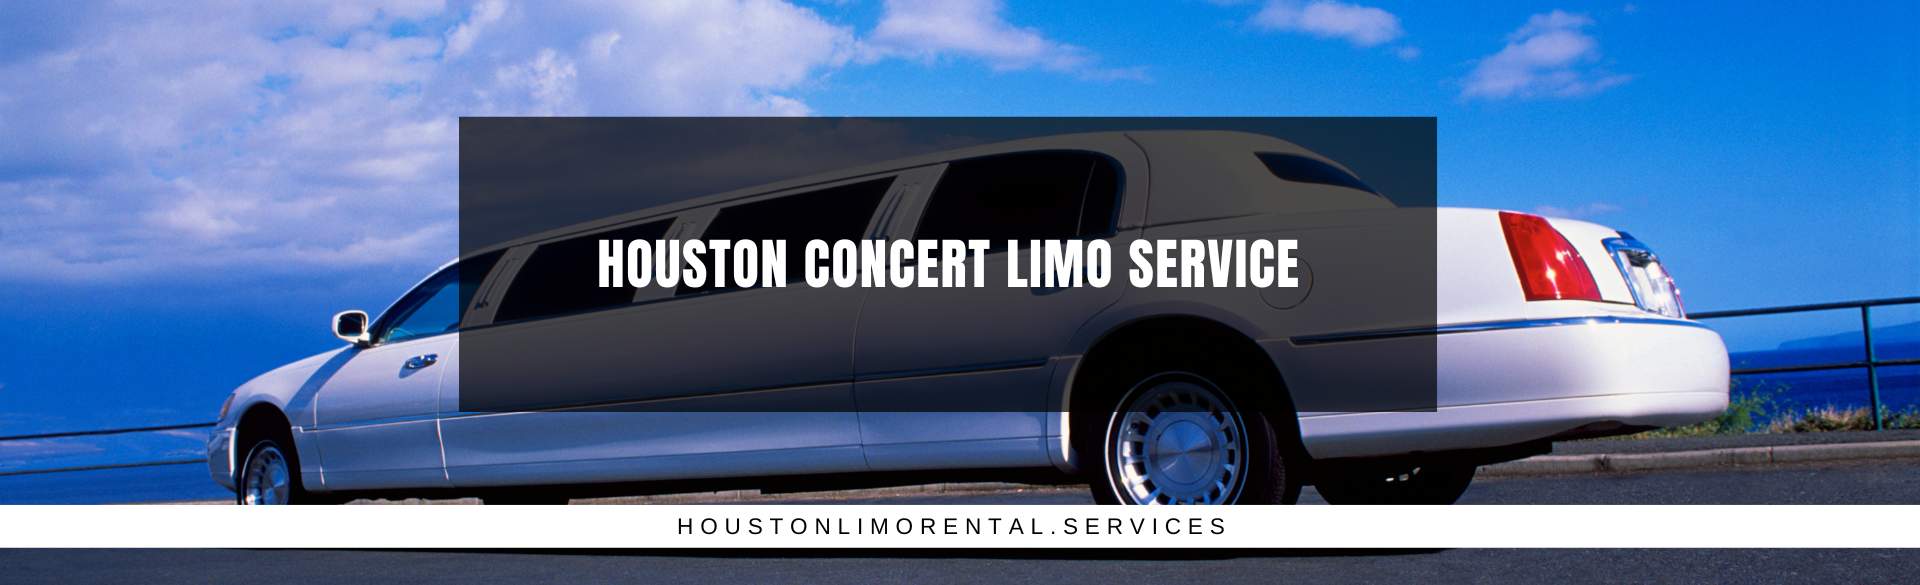 Houston Concert Limo Service